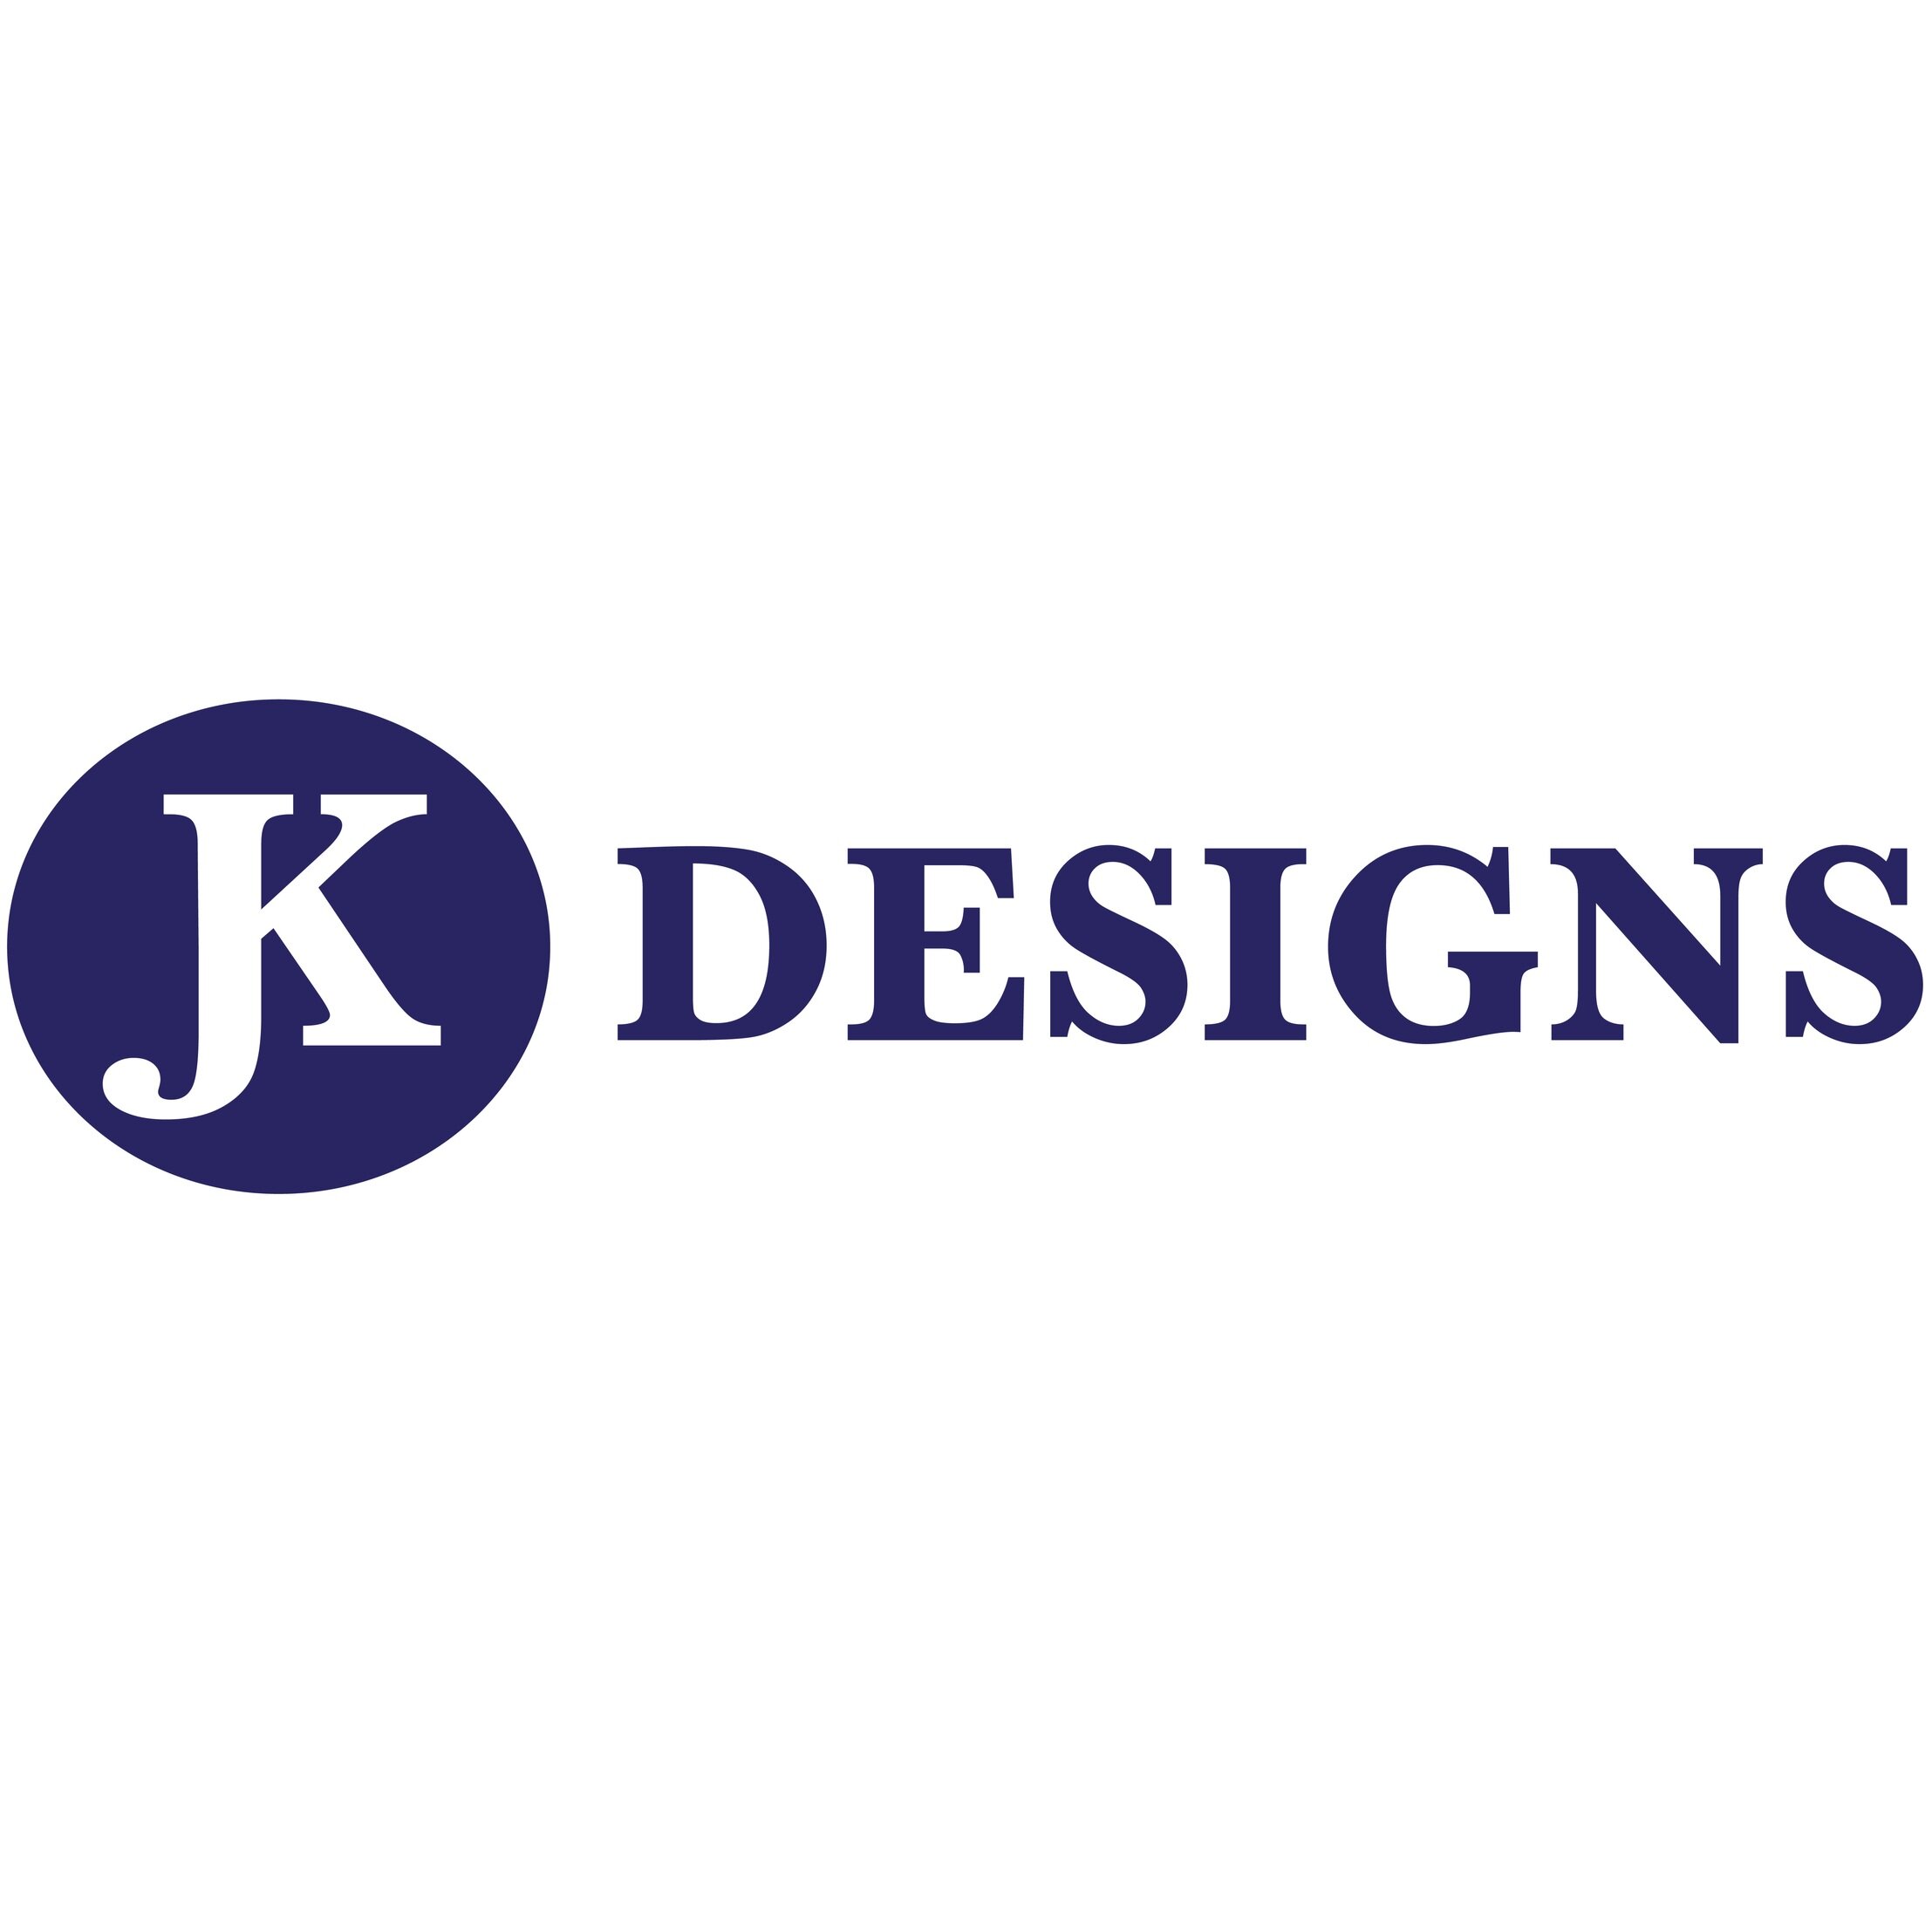 JK+Designs+SQ-05.jpg